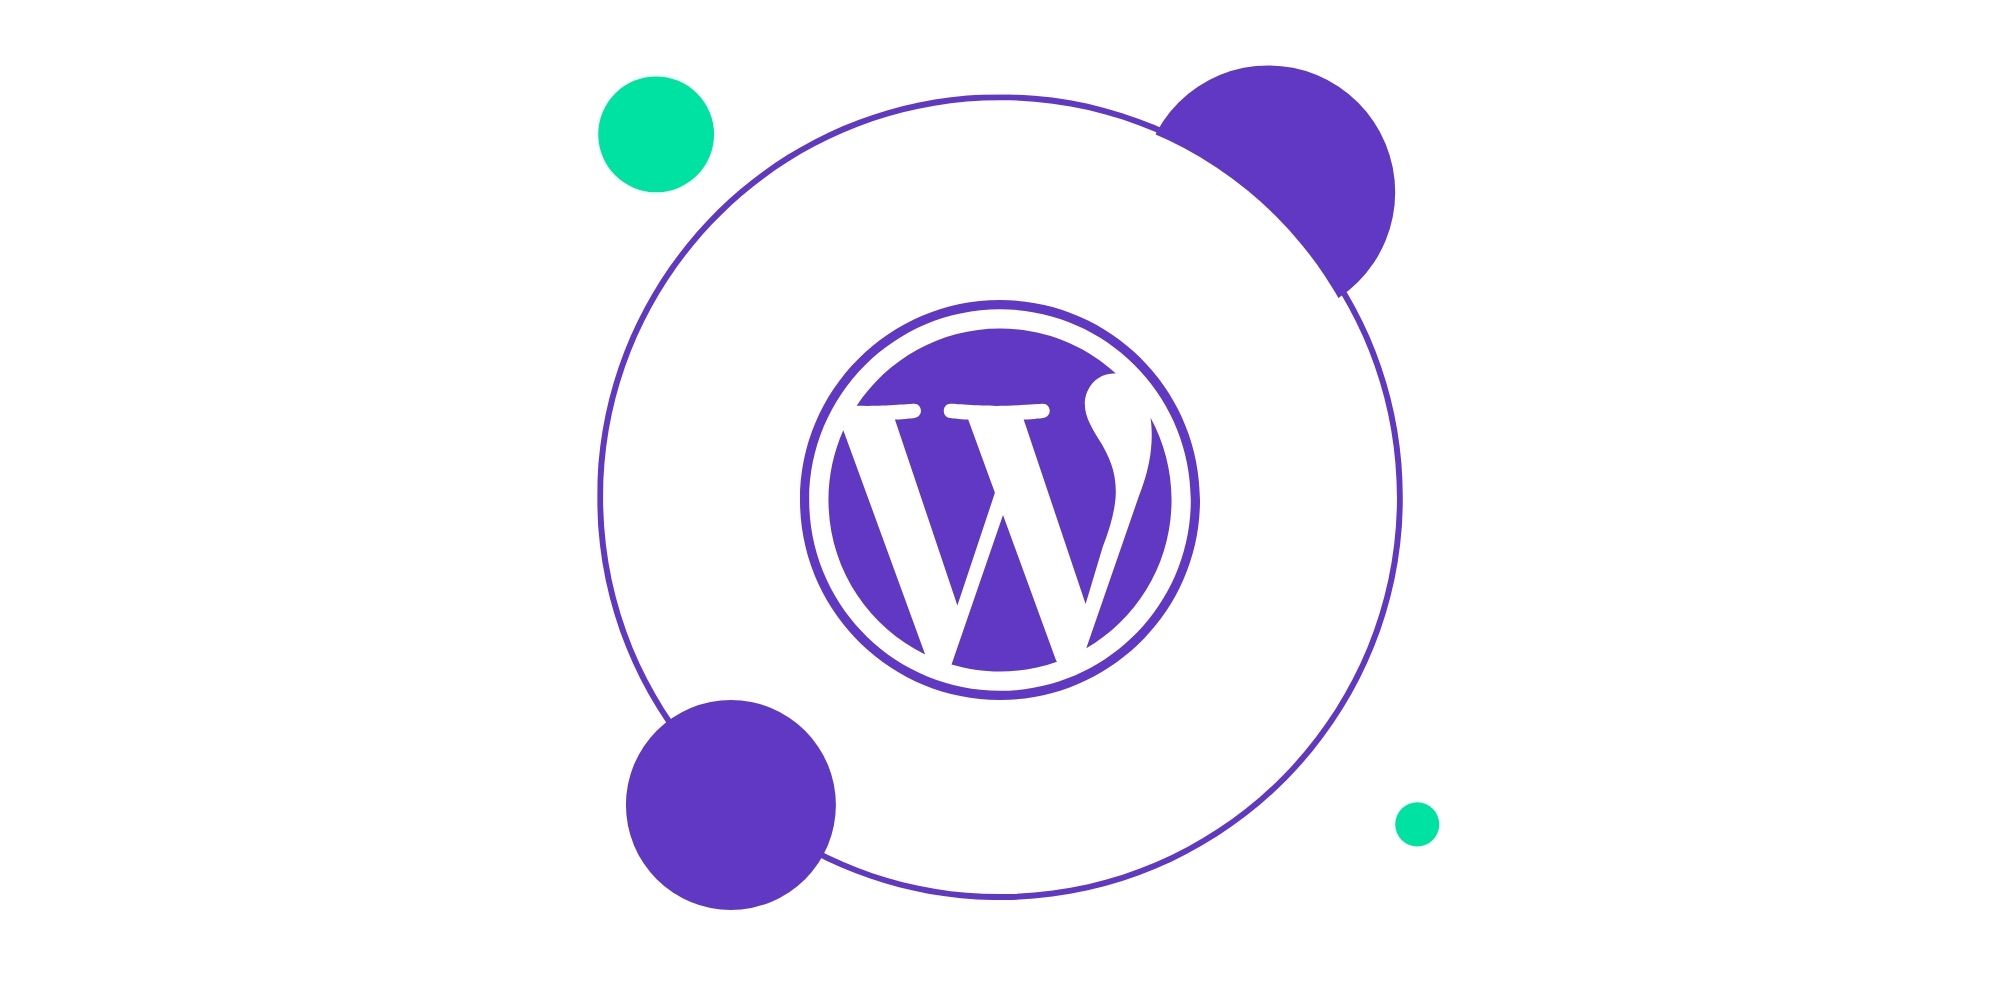 WordPress website: is it for me?